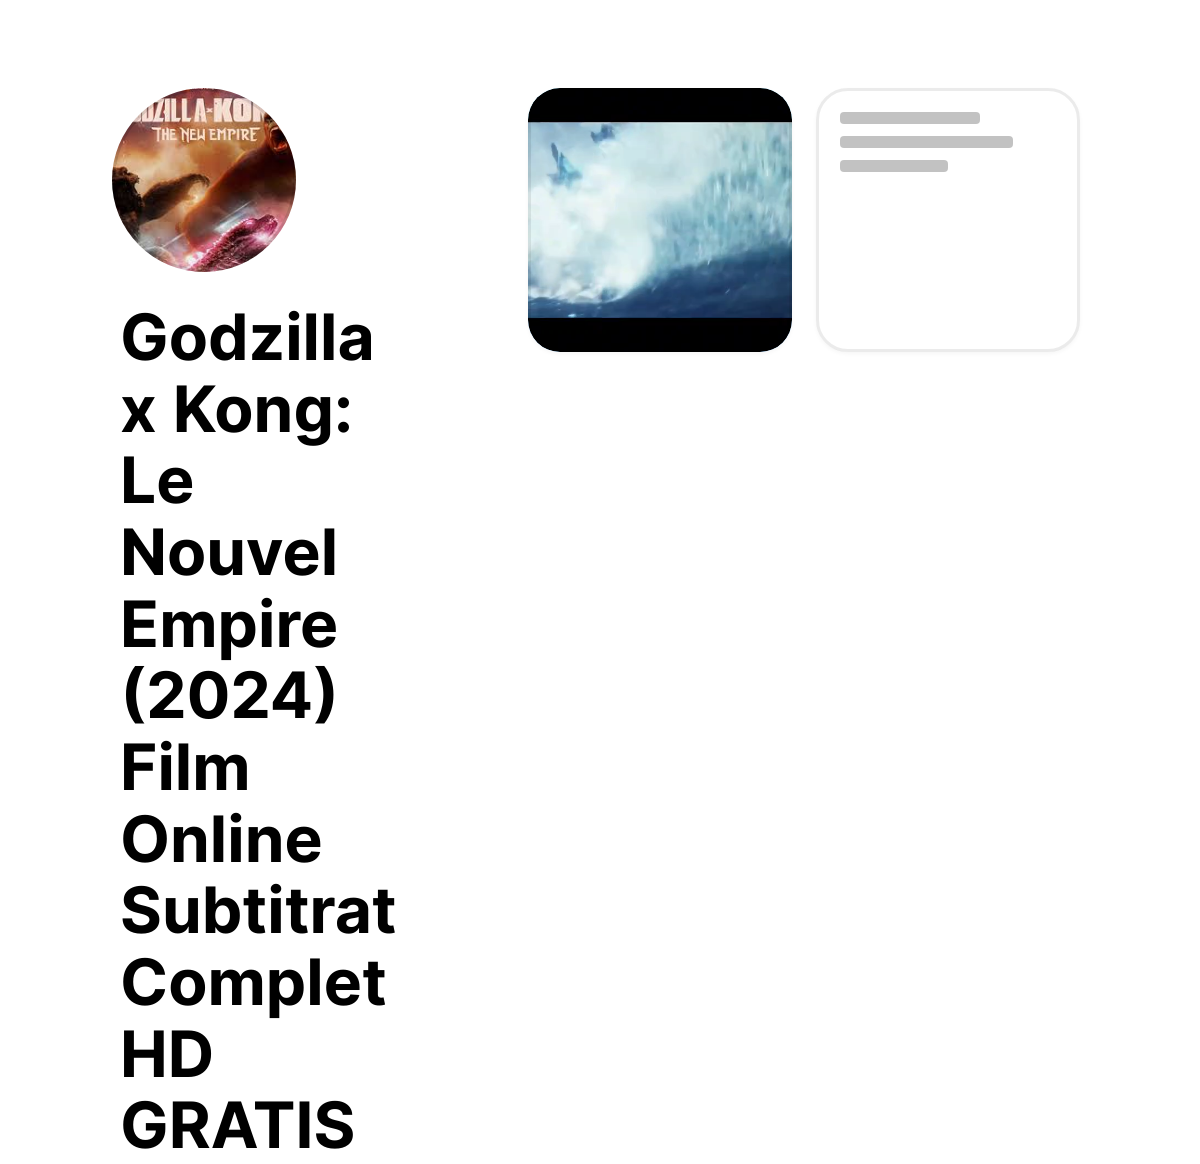 Godzilla x Kong Le Nouvel Empire (2024) Film Online Subtitrat Complet